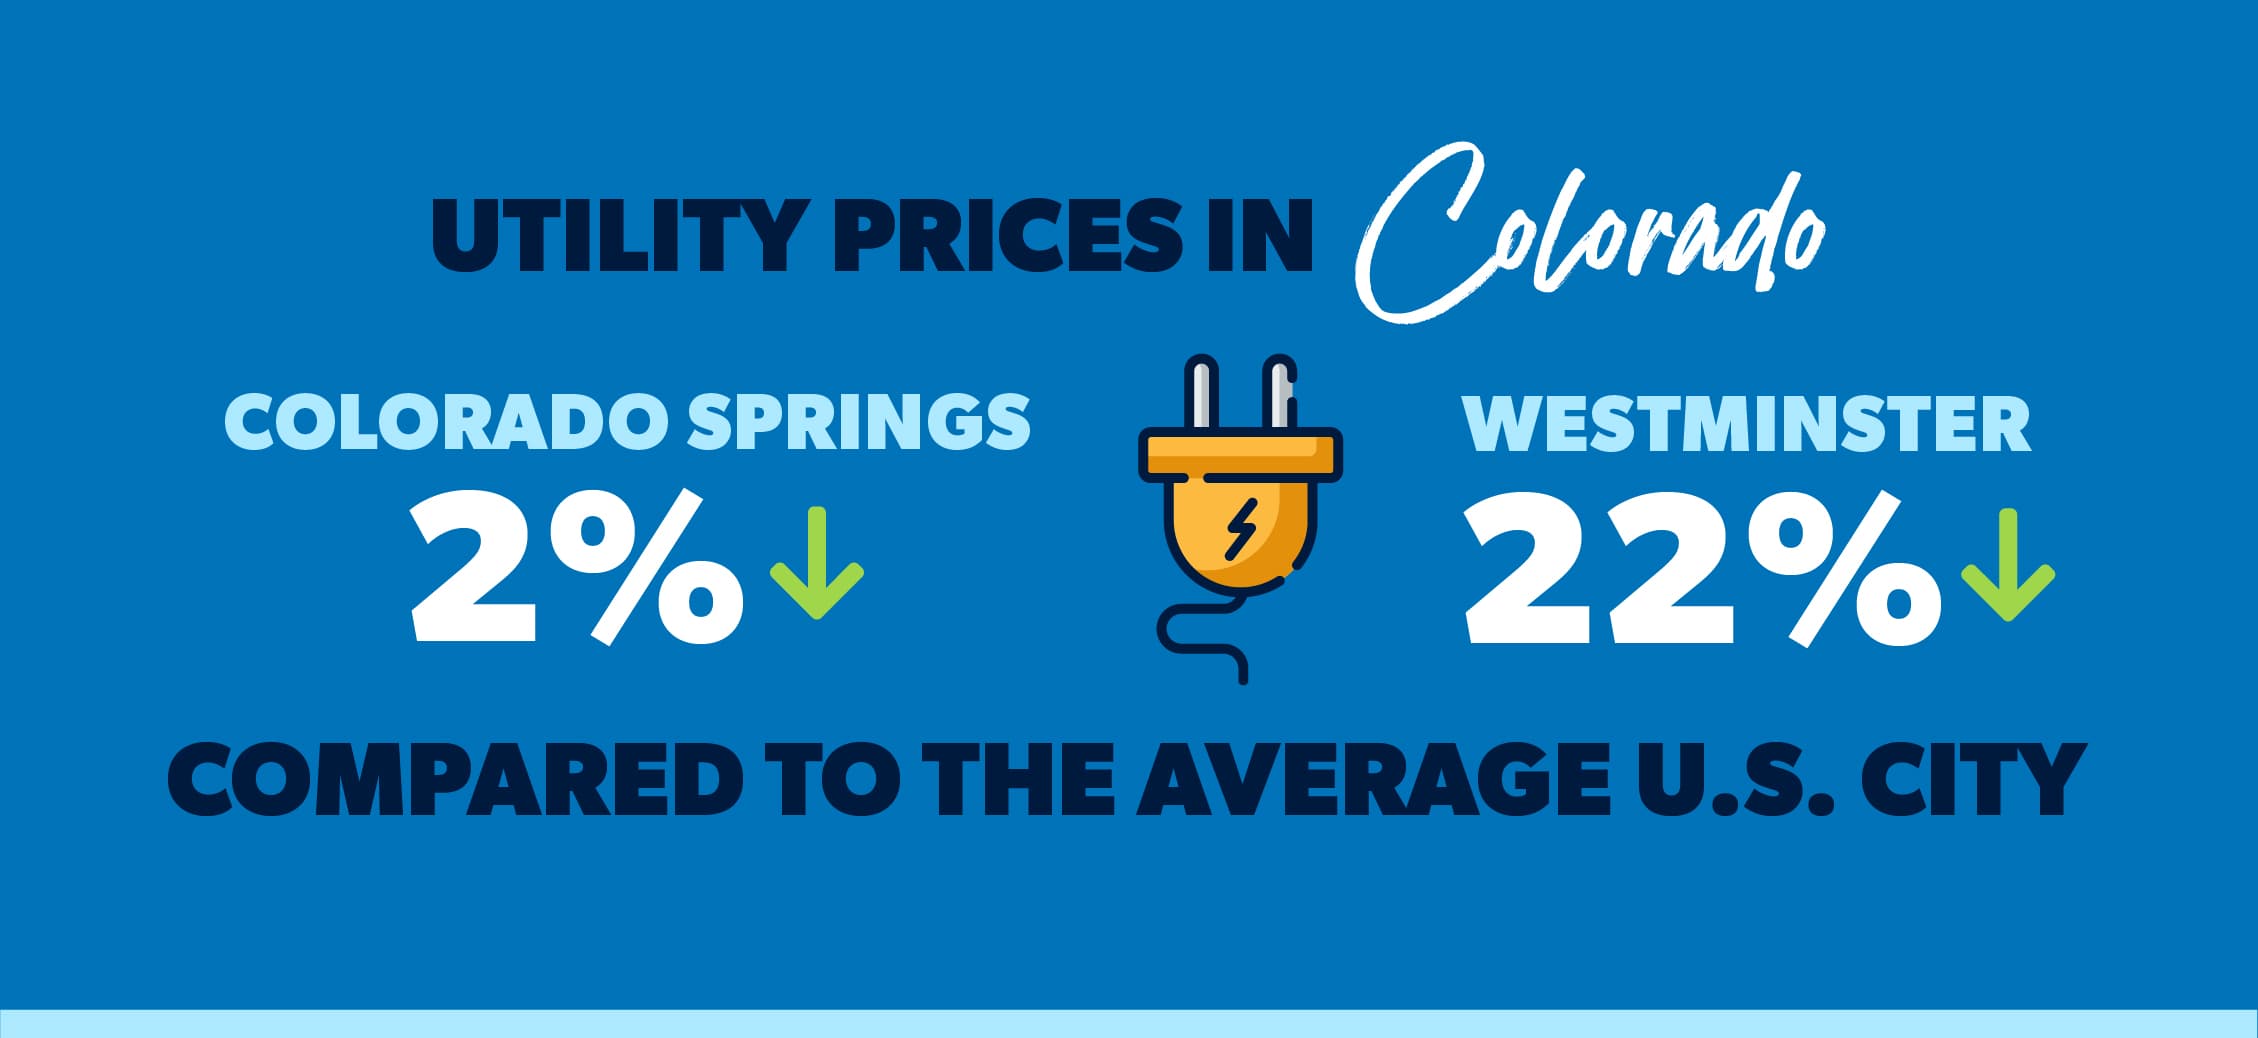 utility prices in colorado